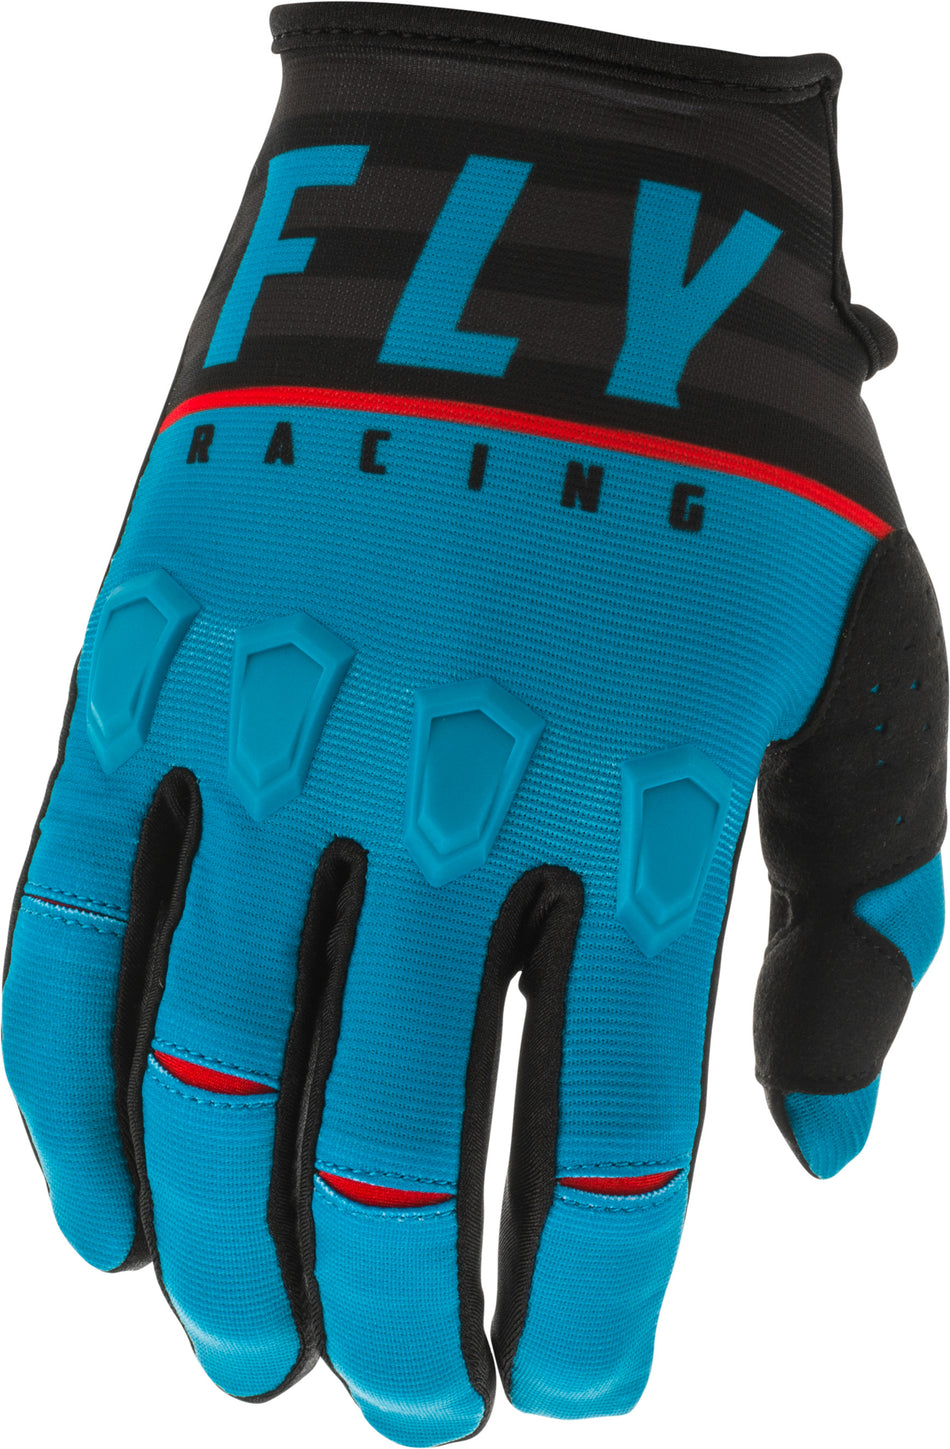 FLY RACING Kinetic K120 Gloves Blue/Black/Red Sz 11 373-41911